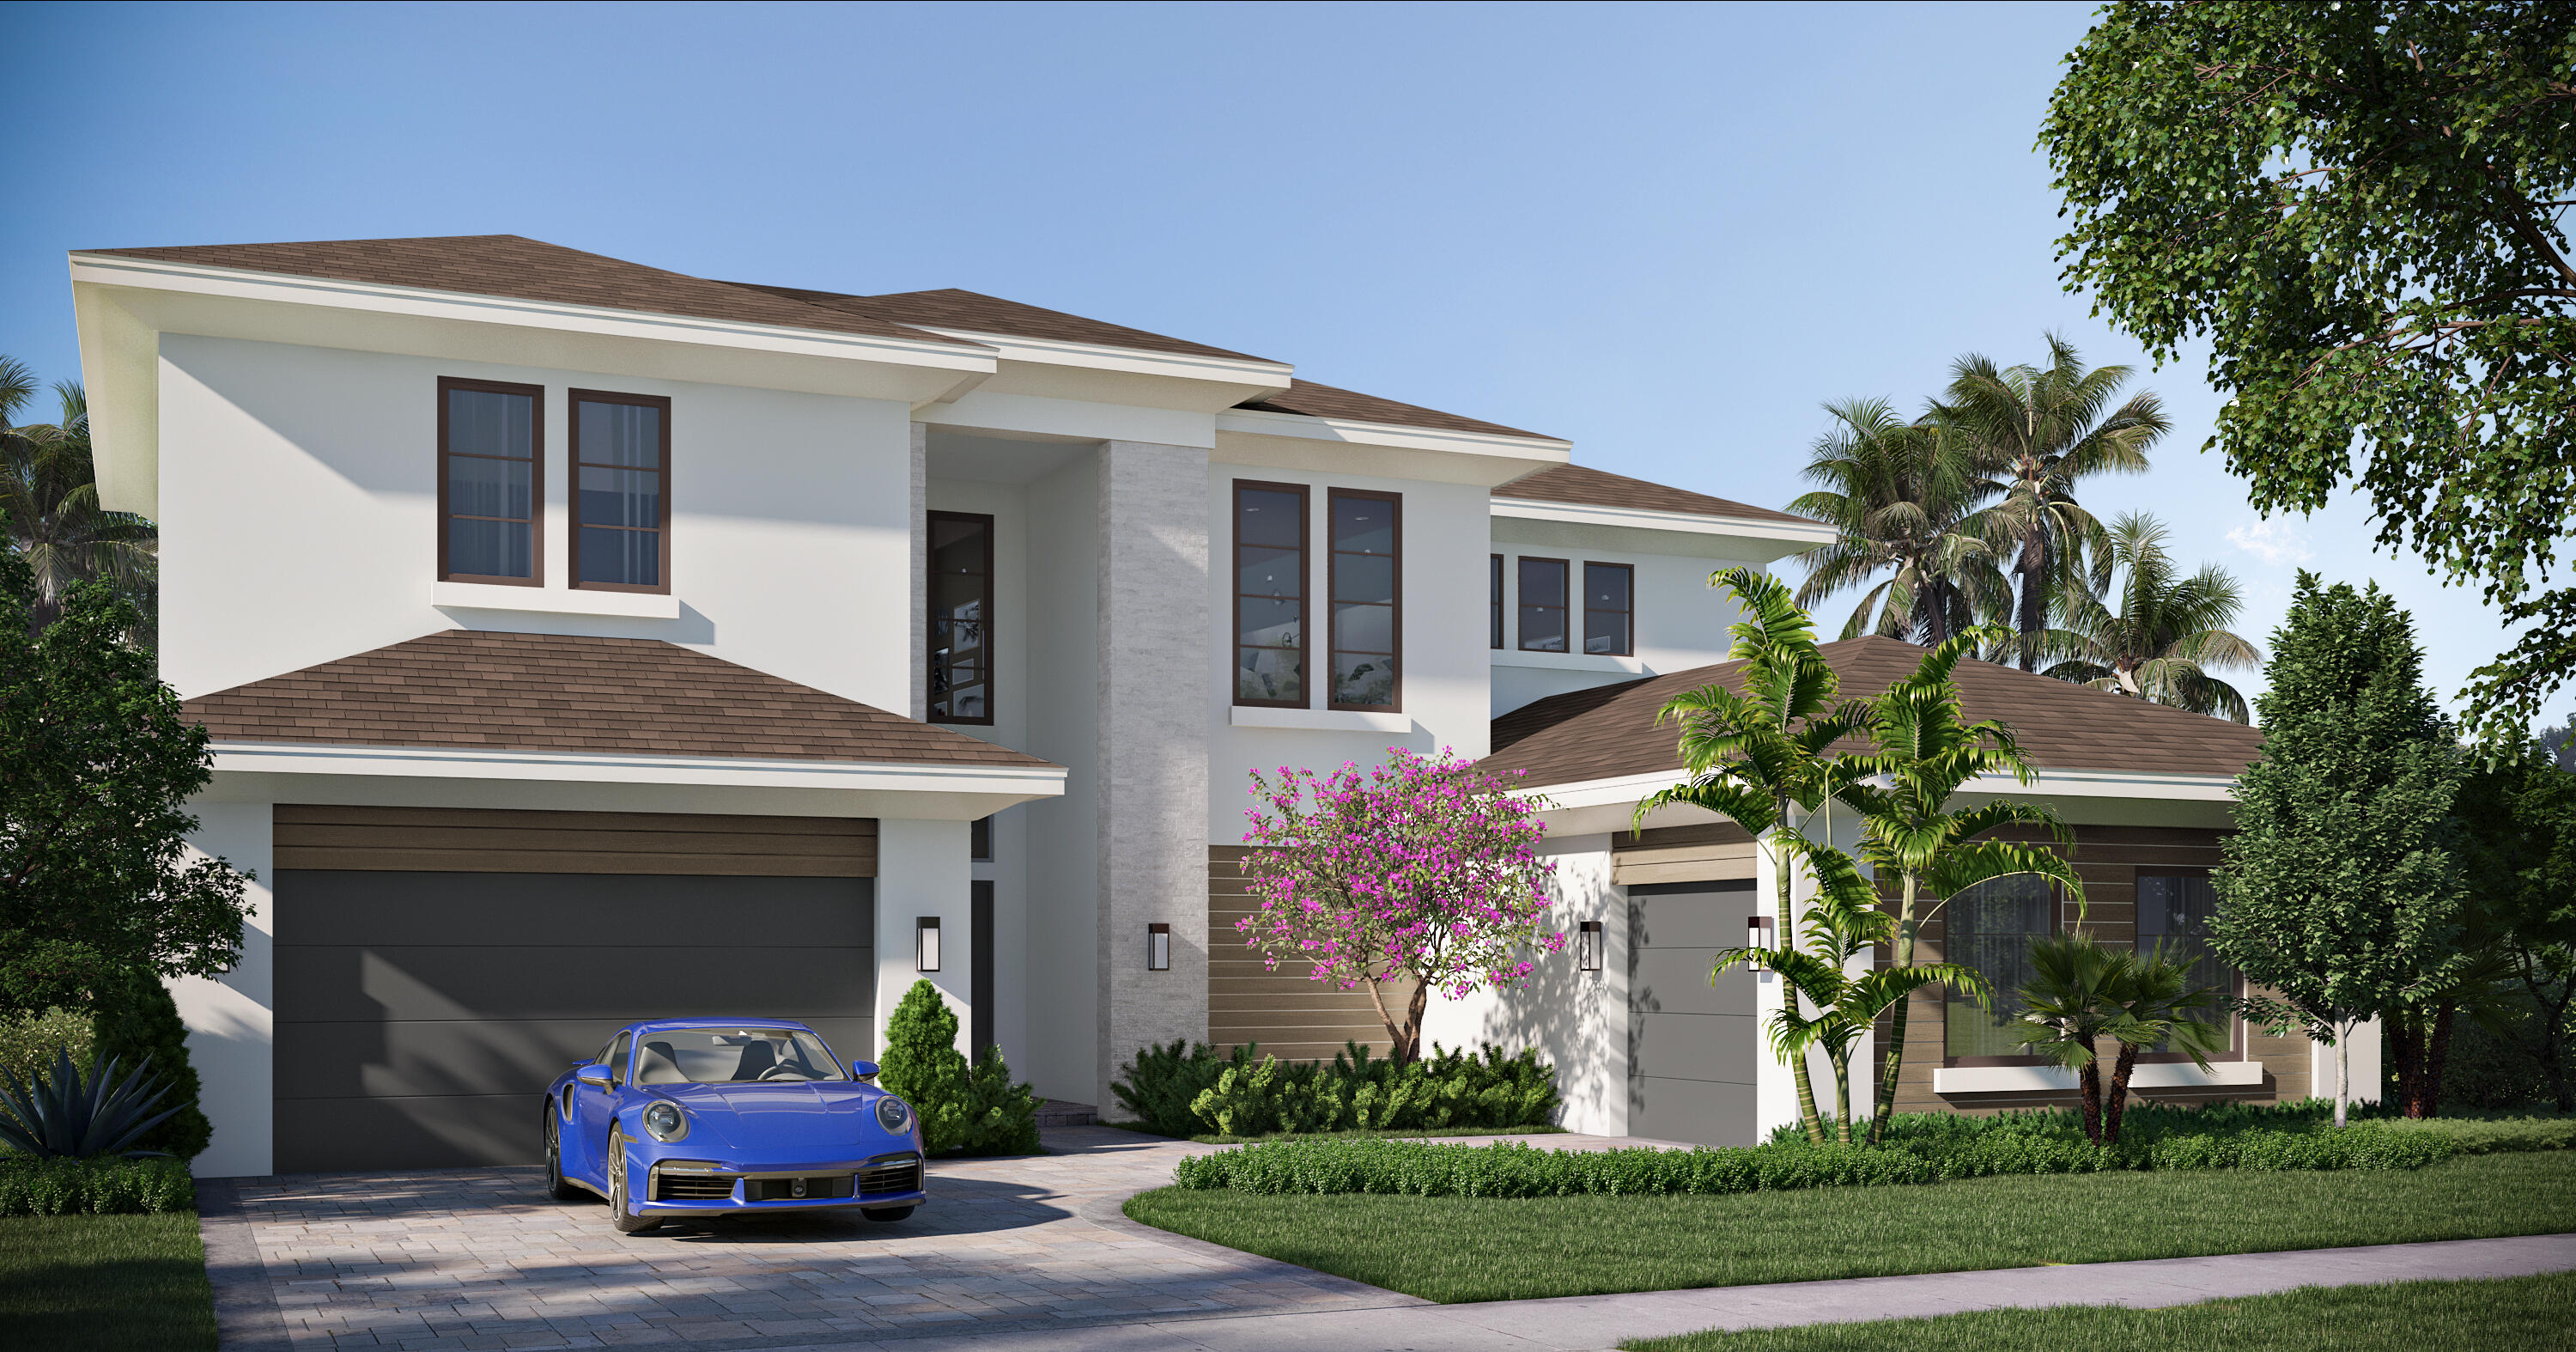 9191 Coral Isles  Lot 74  Circle, Palm Beach Gardens, Palm Beach County, Florida - 5 Bedrooms  
2.5 Bathrooms - 